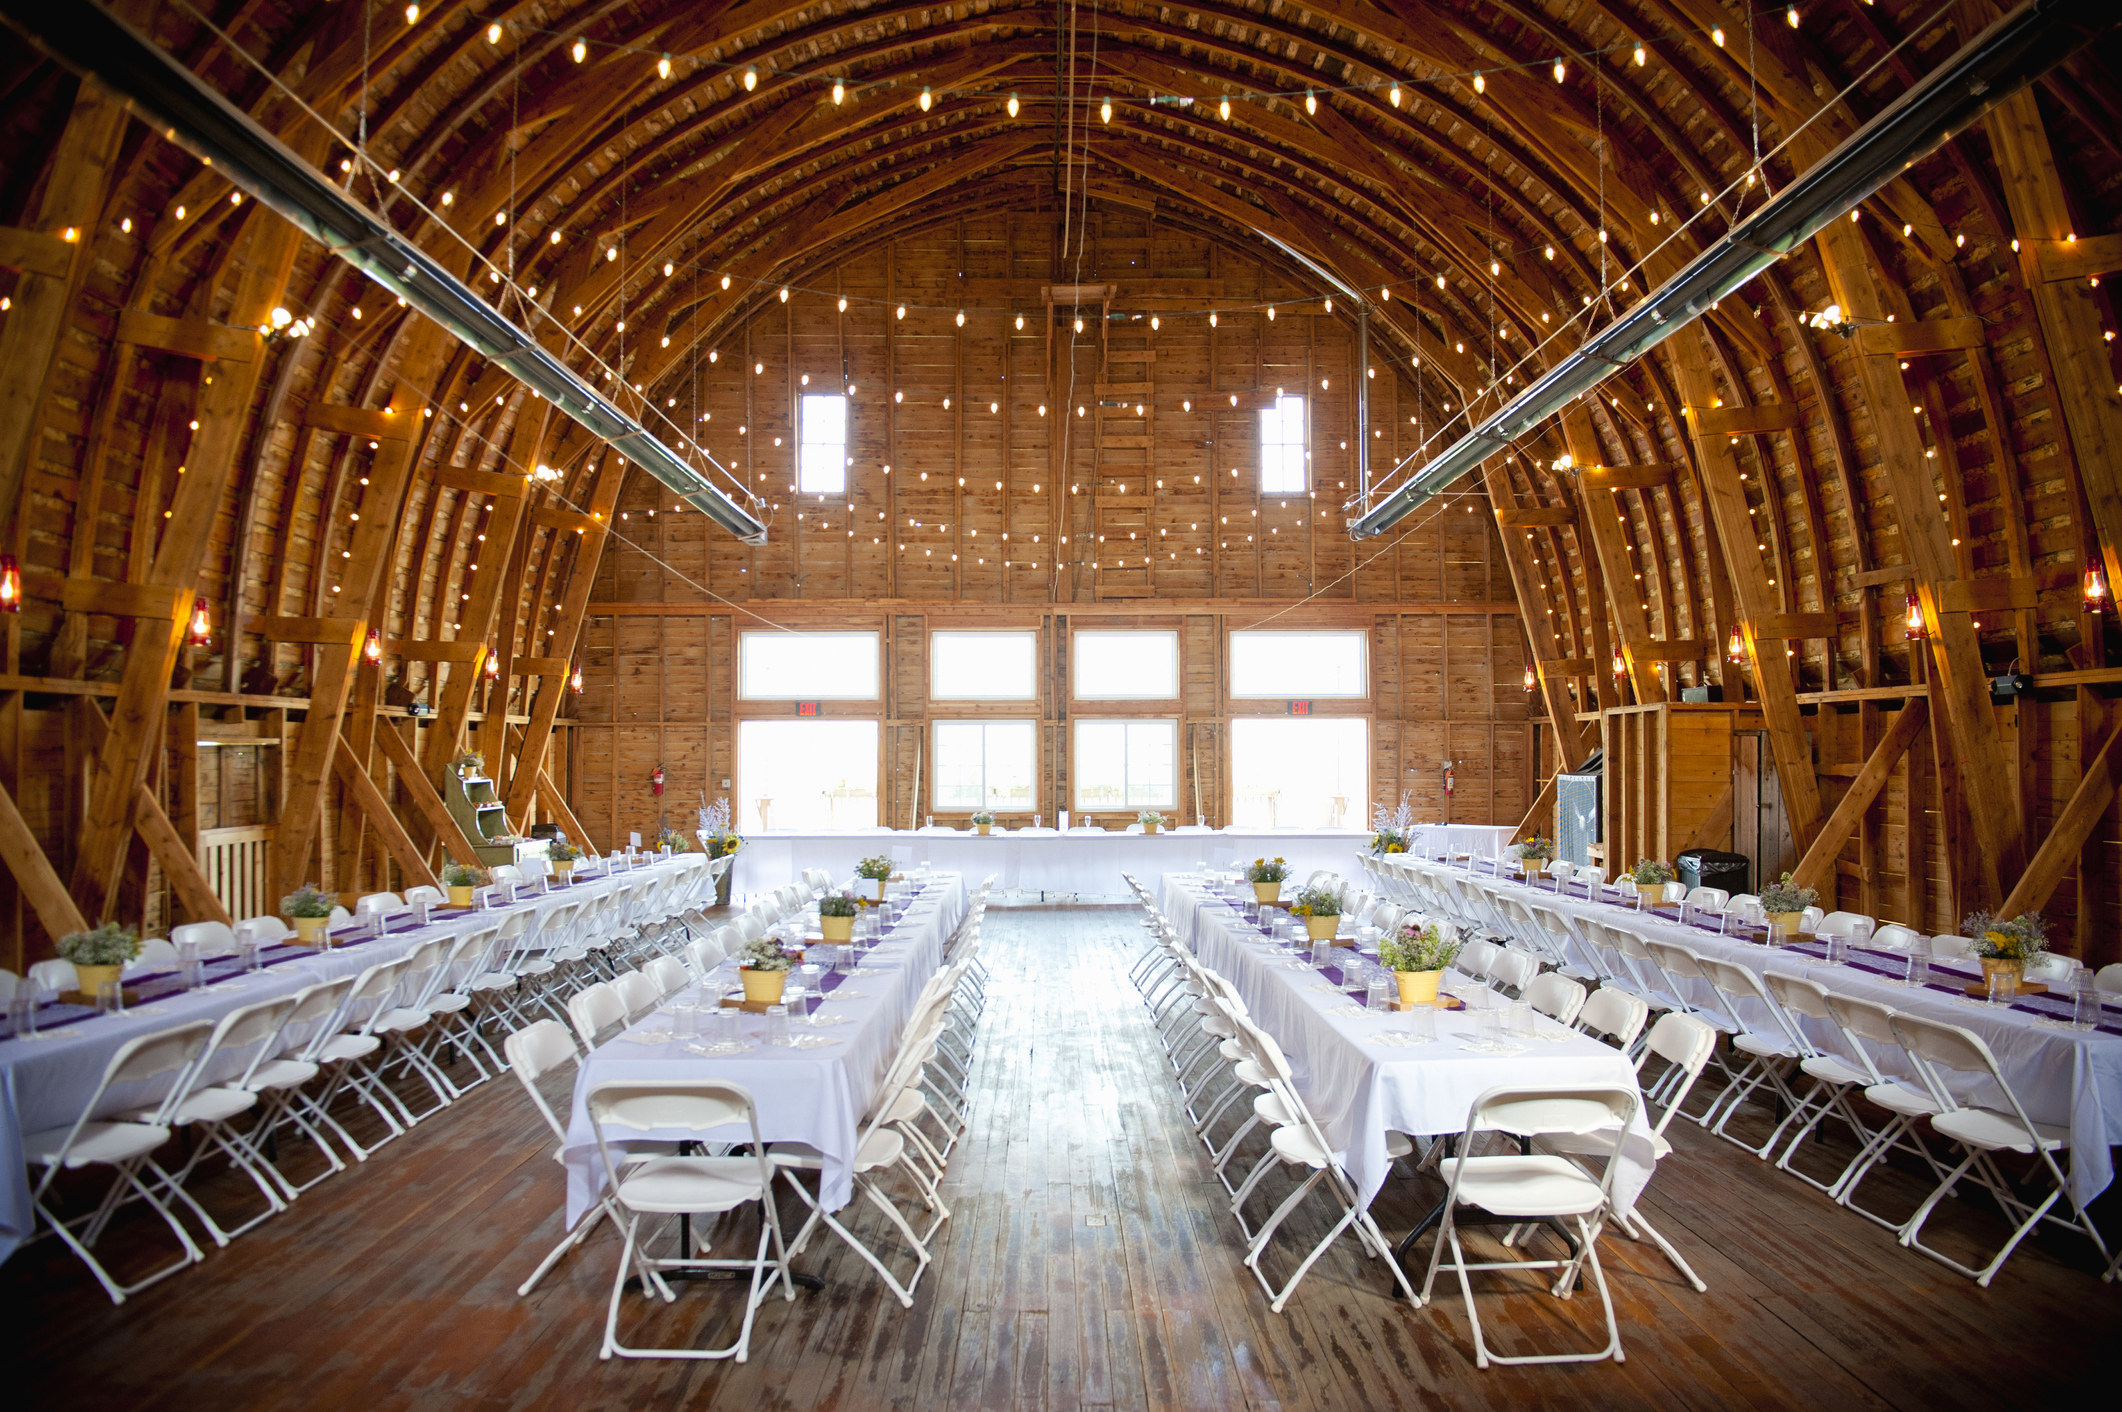 A barn interior setup for a wedding reception